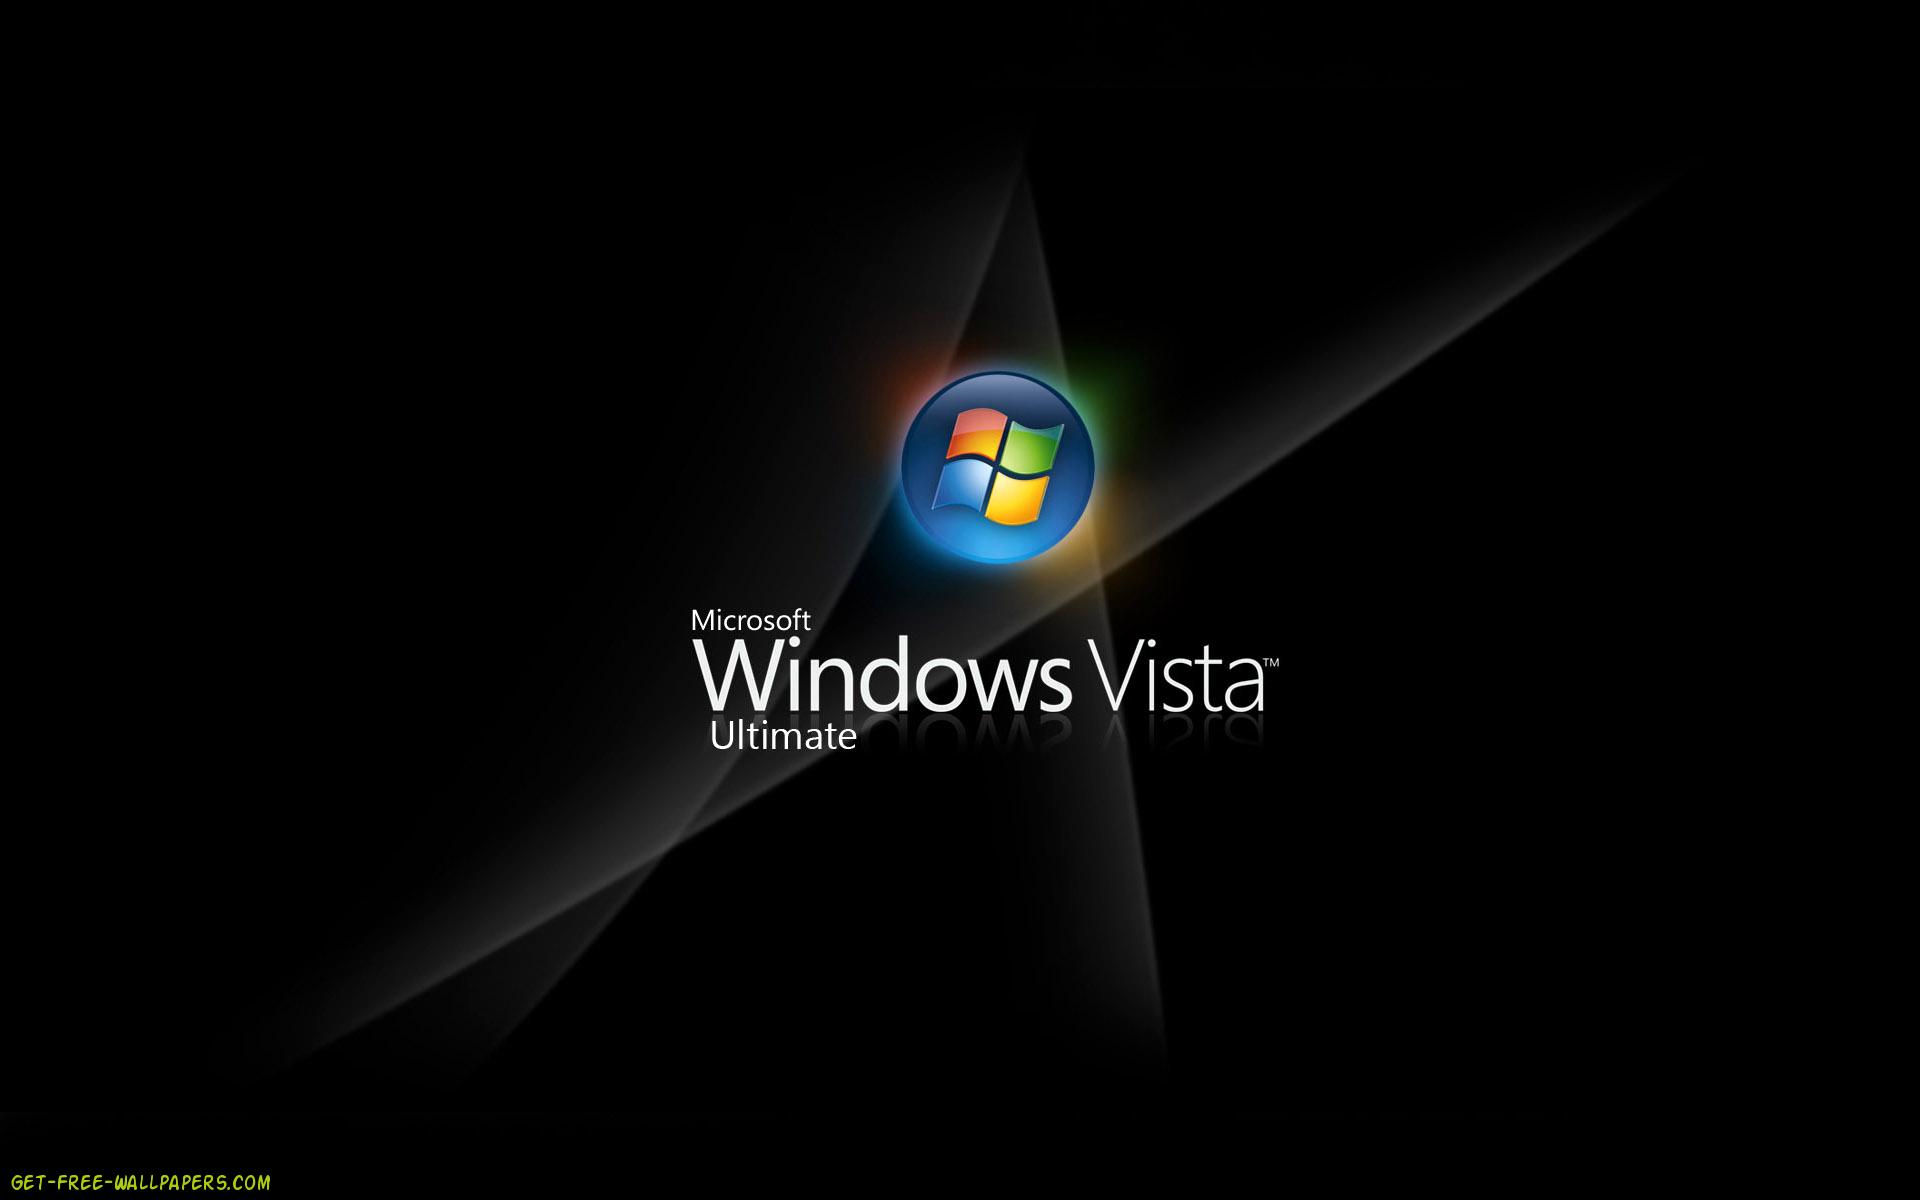 Microsoft Windows Vista Ultimate Wallpaper